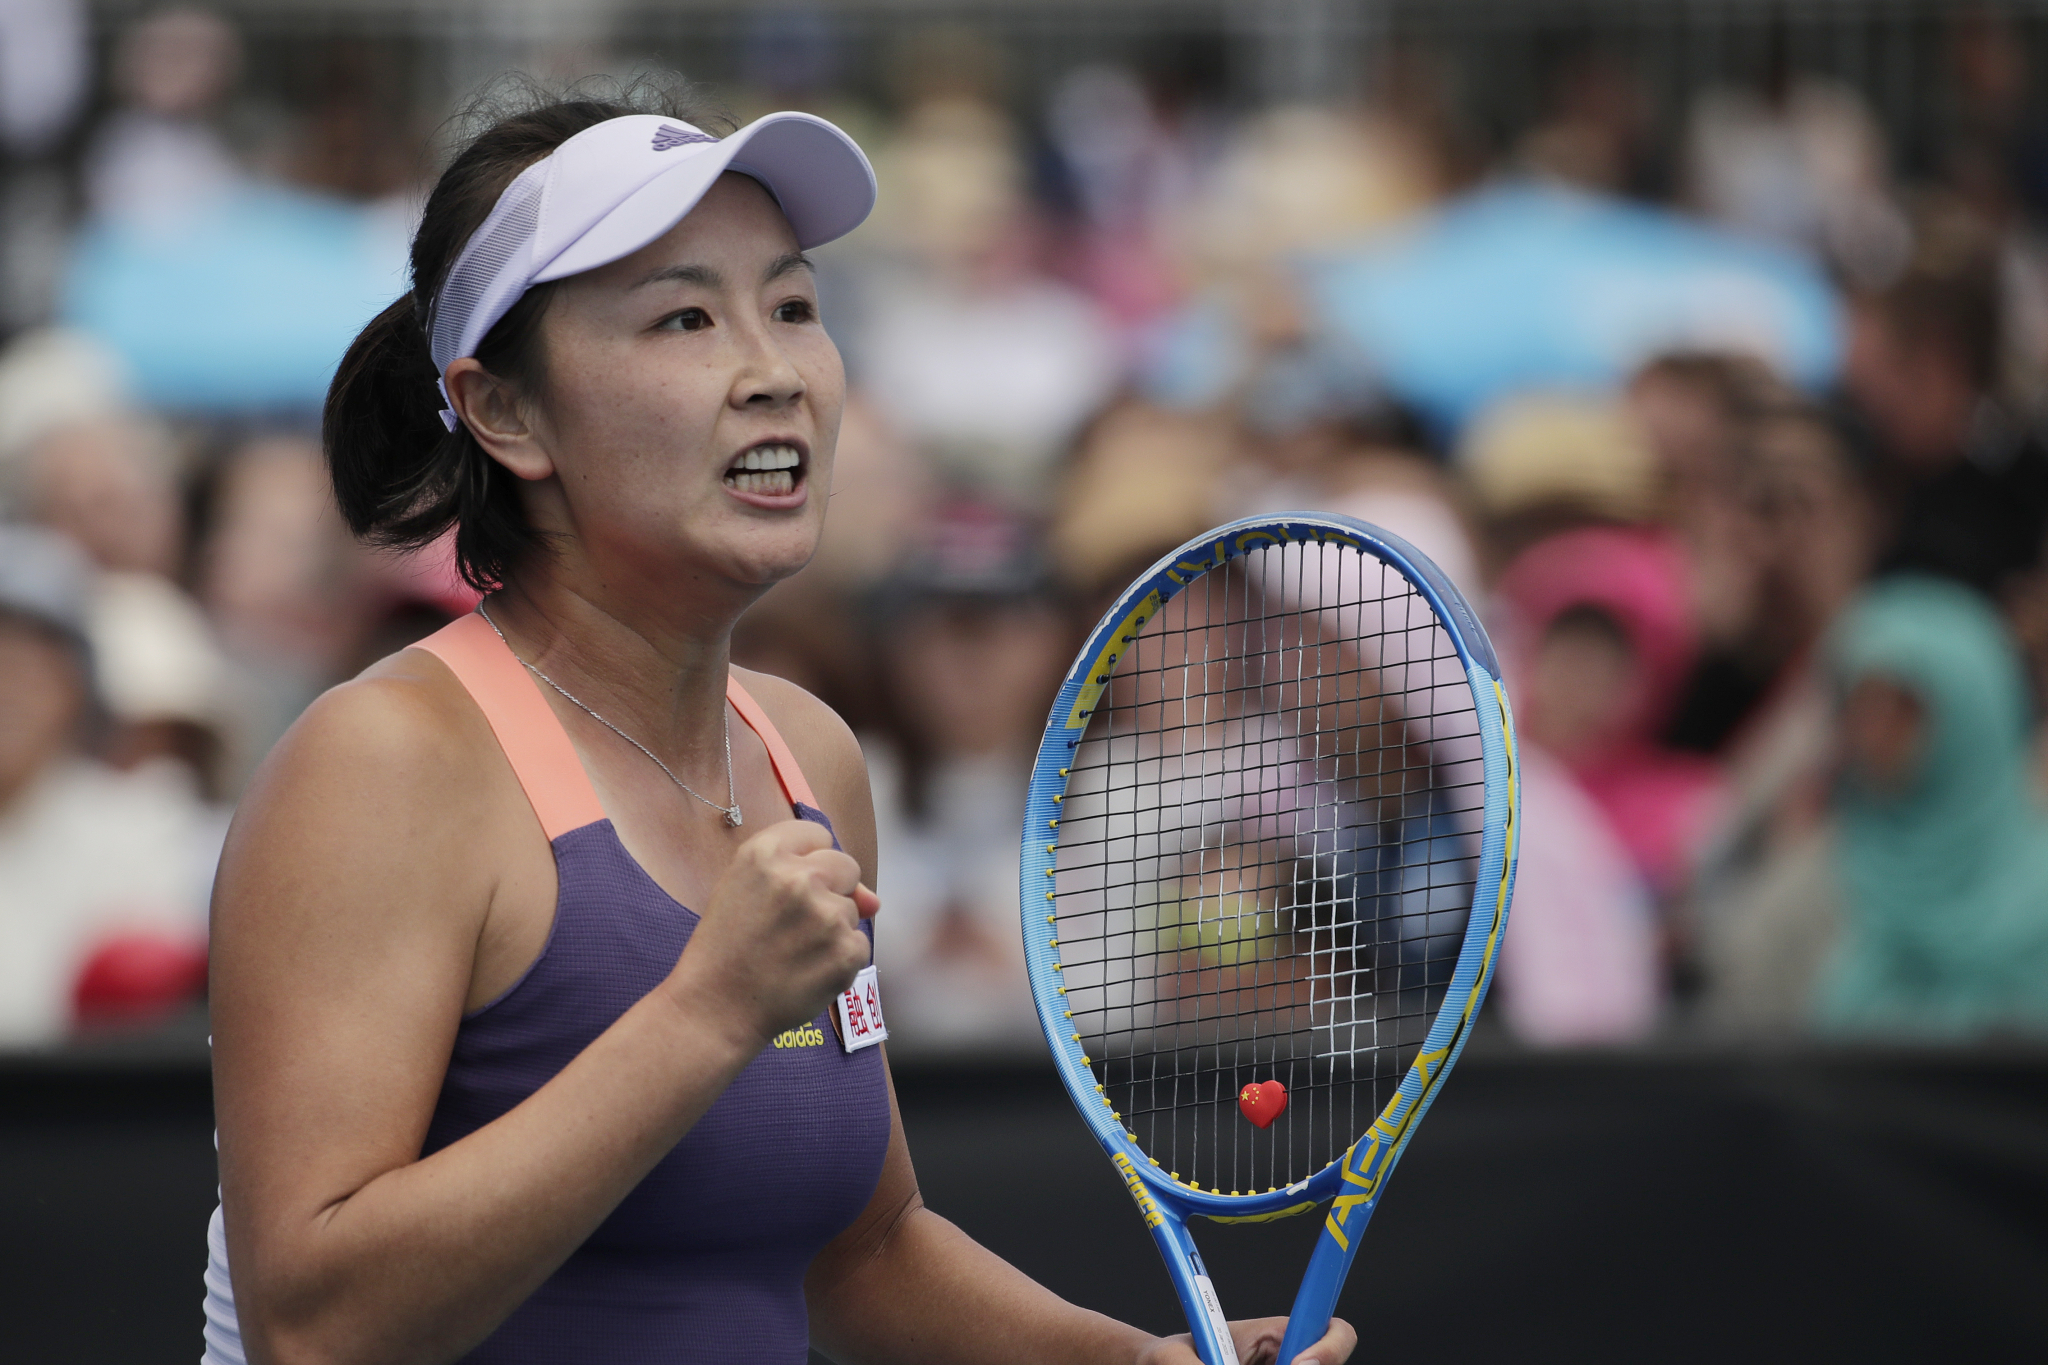 HITNO SE OGLASILI! Kinesko ministarstvo spoljnih poslova izdalo saopštenje povodom nestanka teniserke!